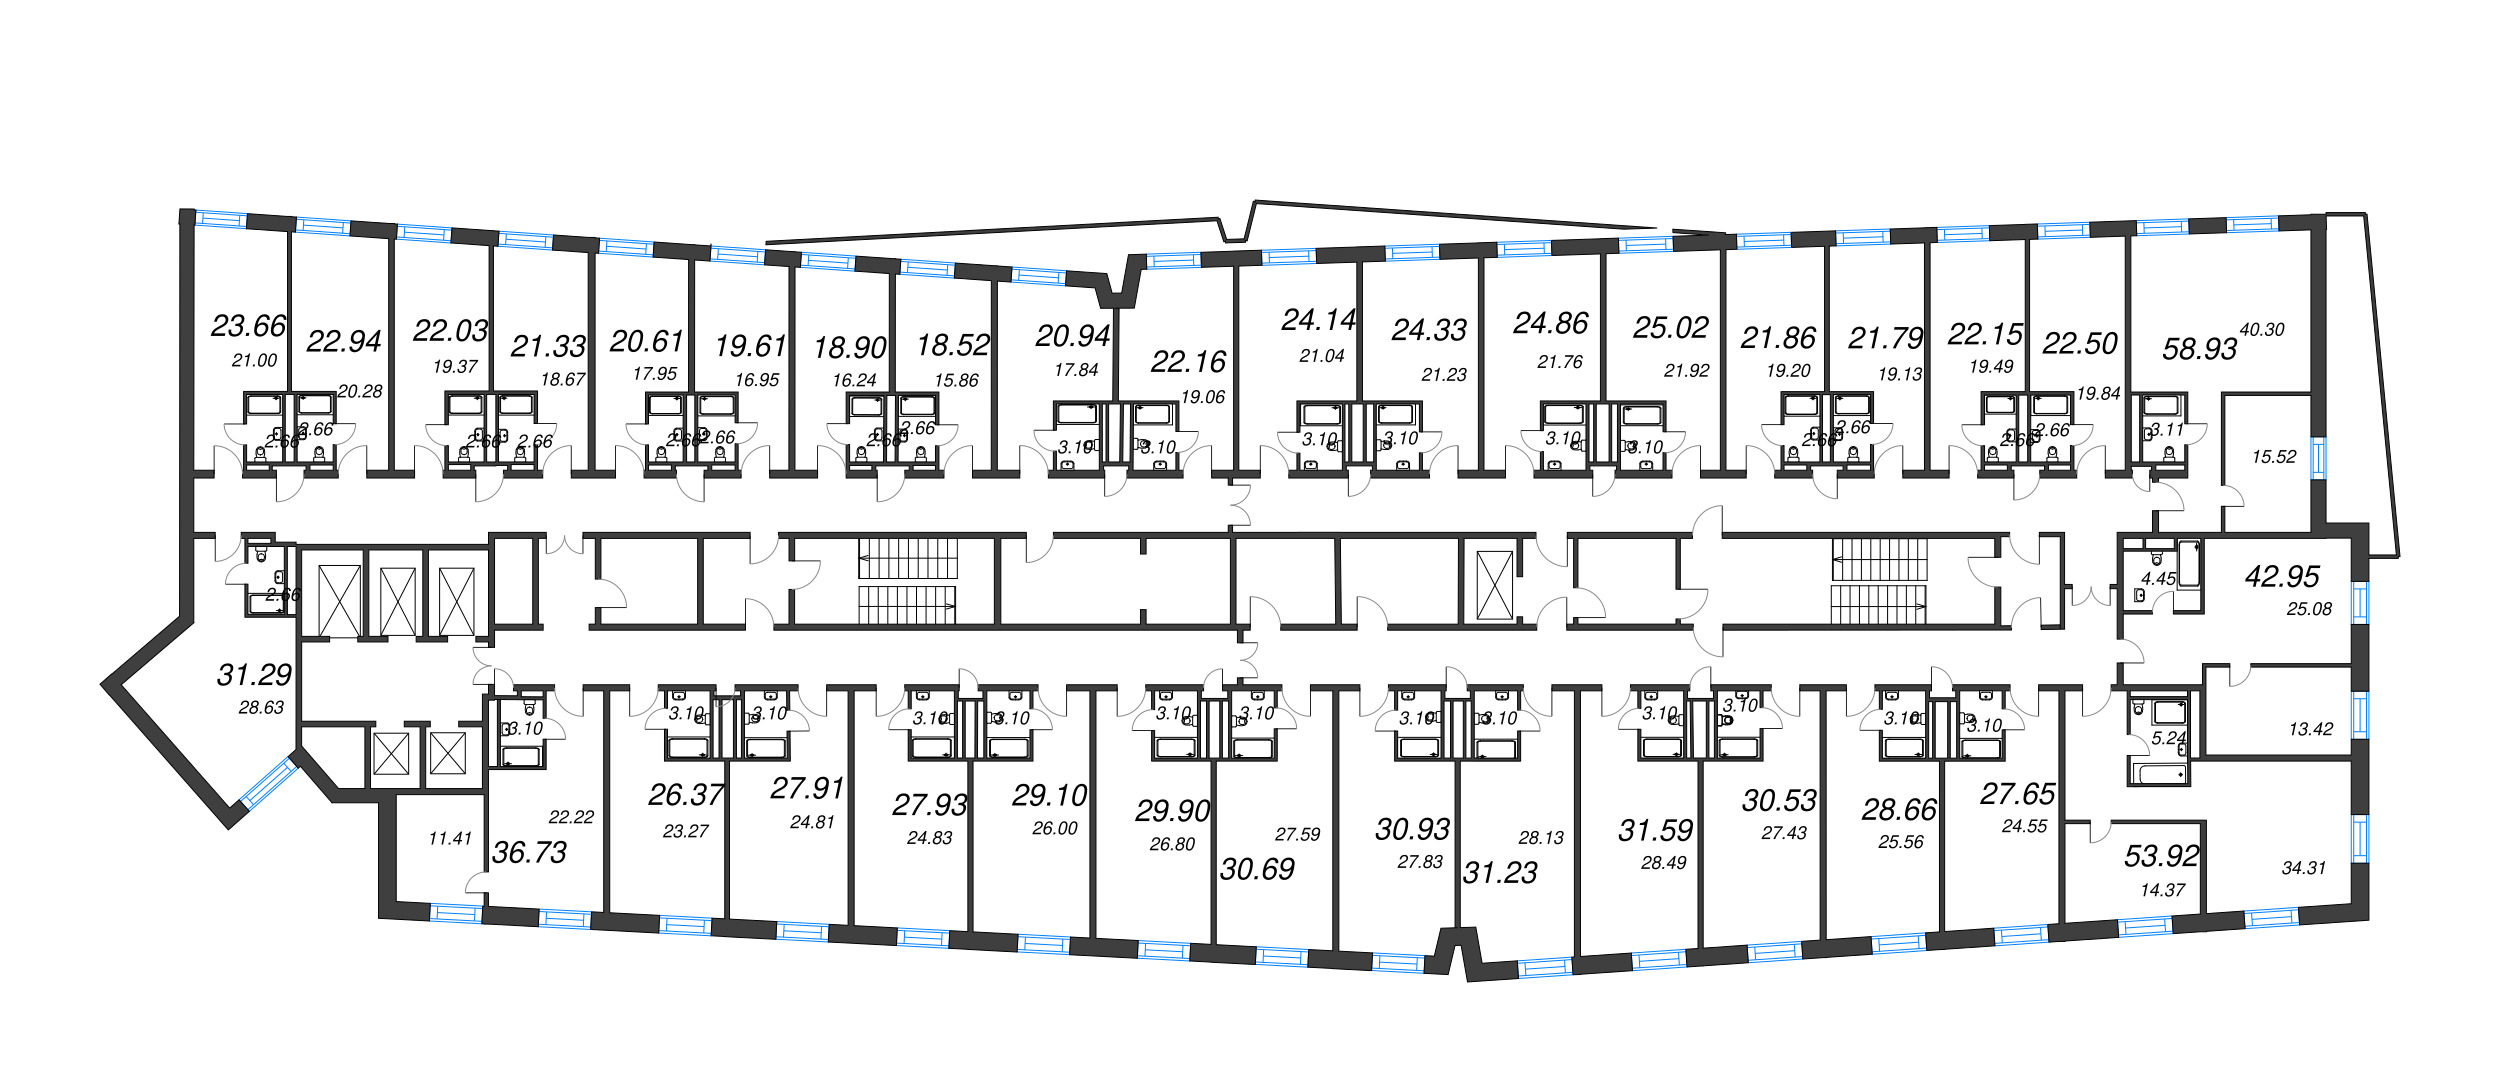 2-комнатная (Евро) квартира, 53.92 м² в ЖК "YE’S Leader" - планировка этажа